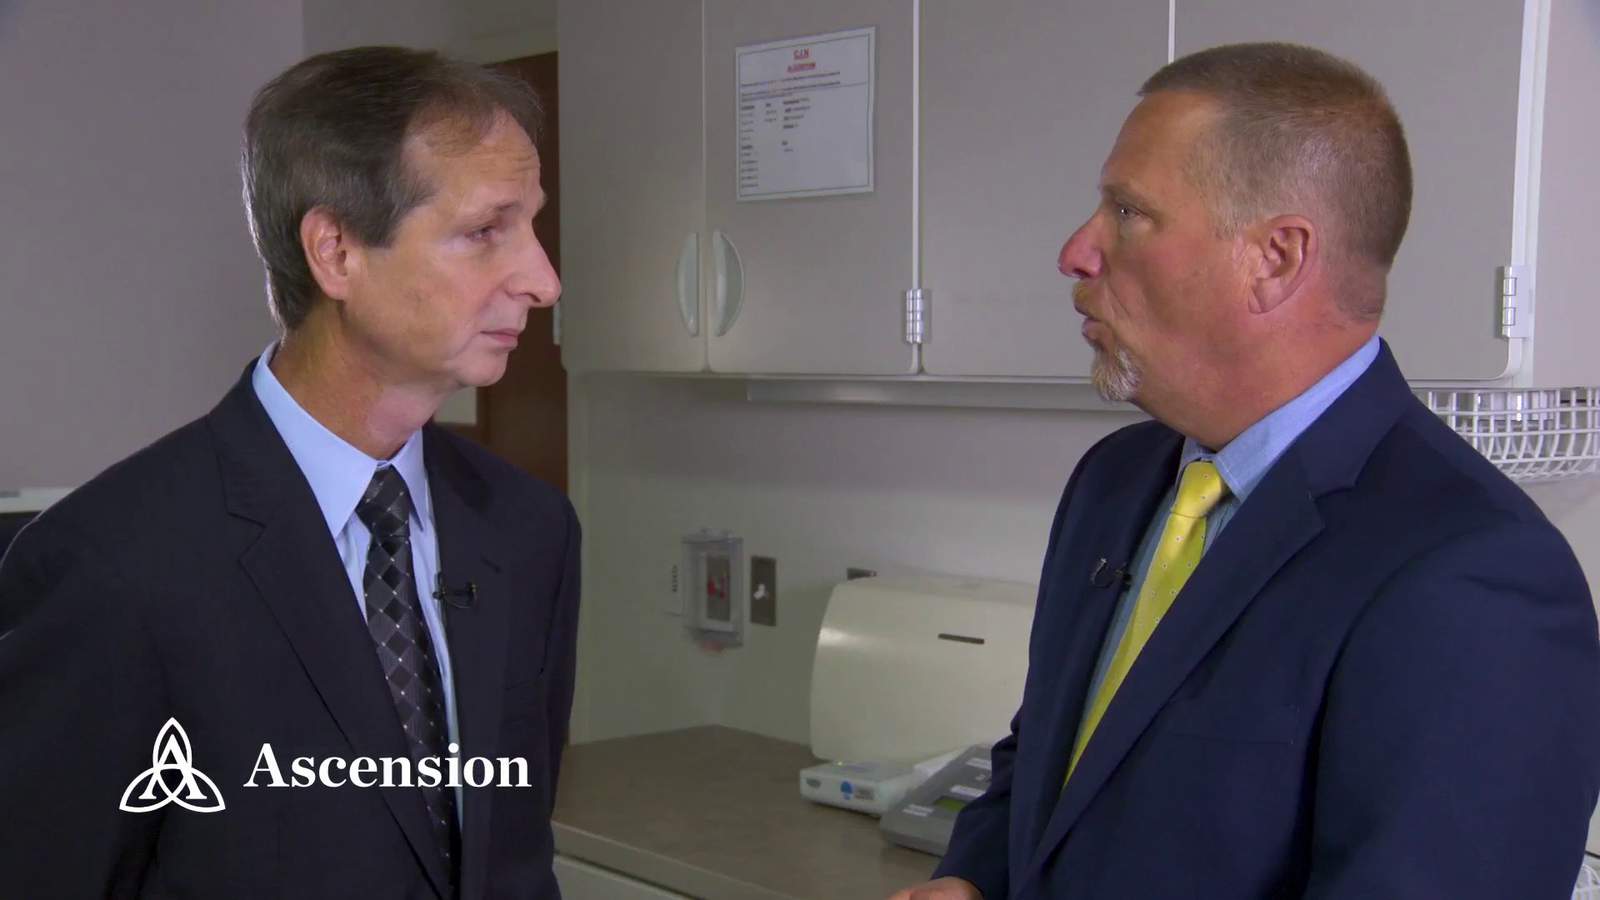 Ascension Michigan Heart Report: Dr. Barbish